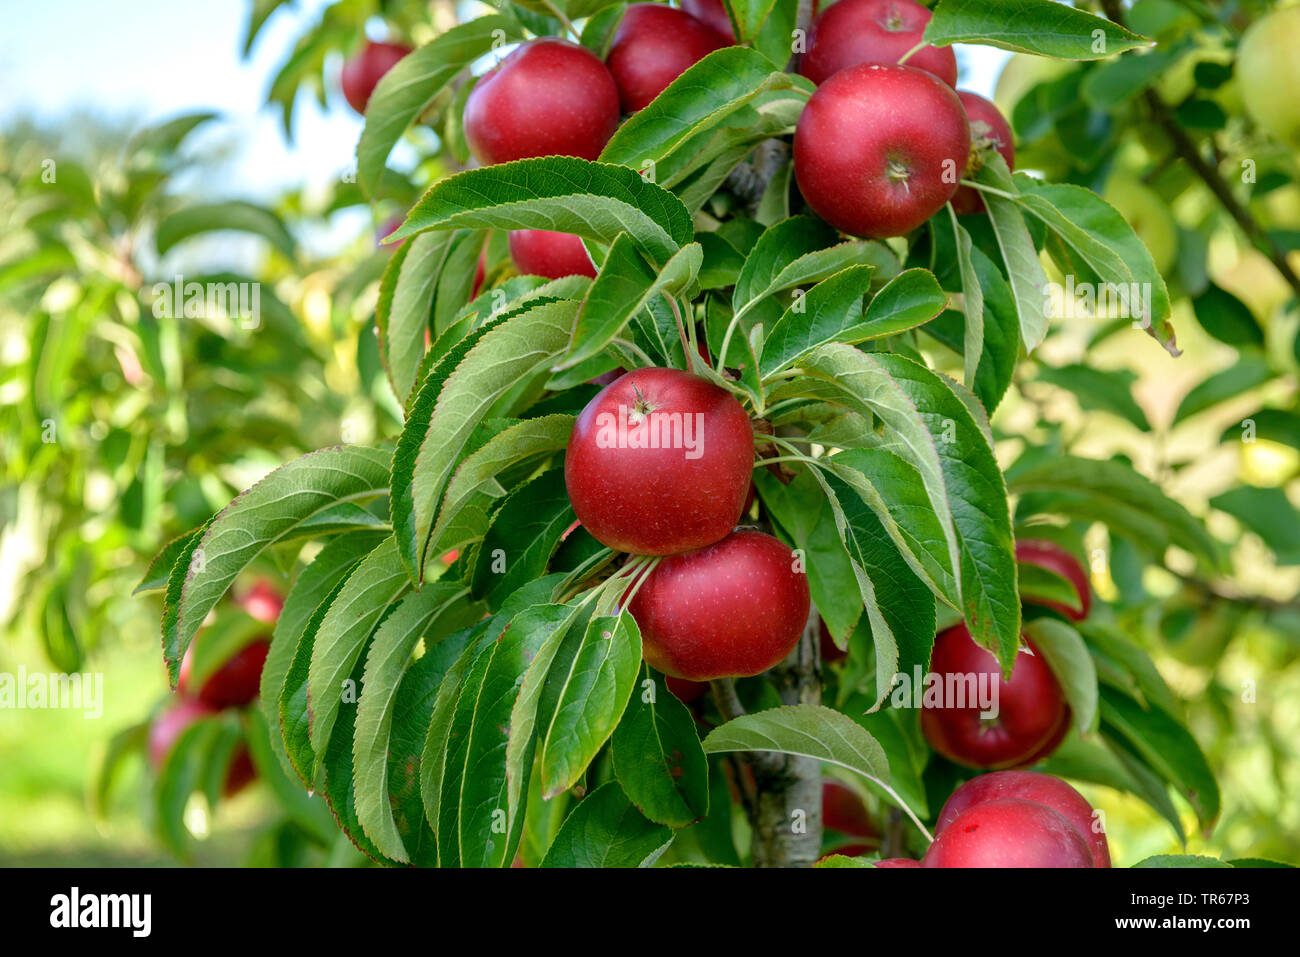 Manzano (Malus domestica 'Sunlight', Malus domestica la luz solar), frutas de cultivar la luz solar Foto de stock